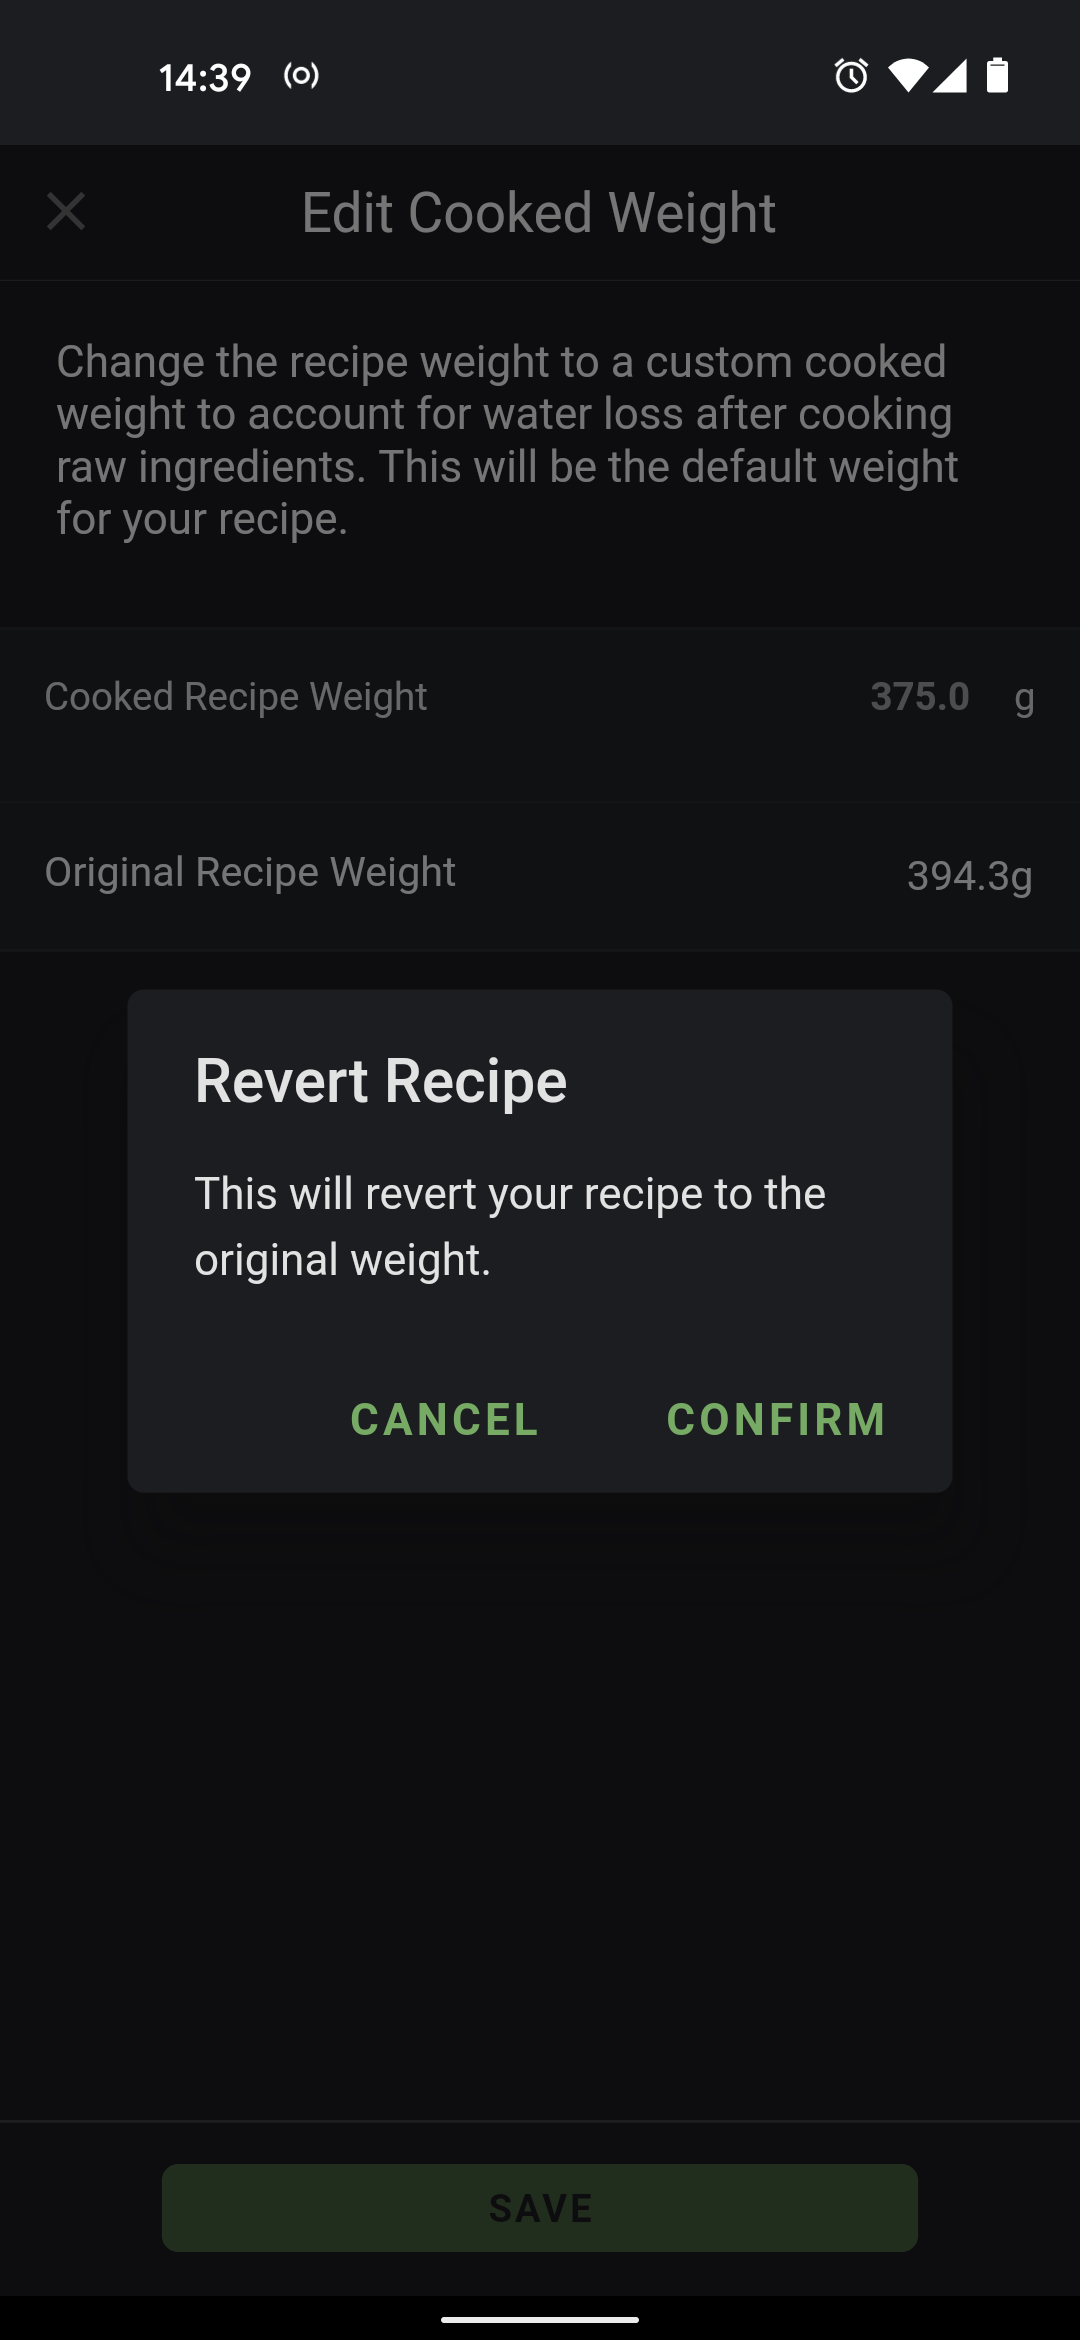 revert_recipe_to_original_weight_confirmation_dialog.png